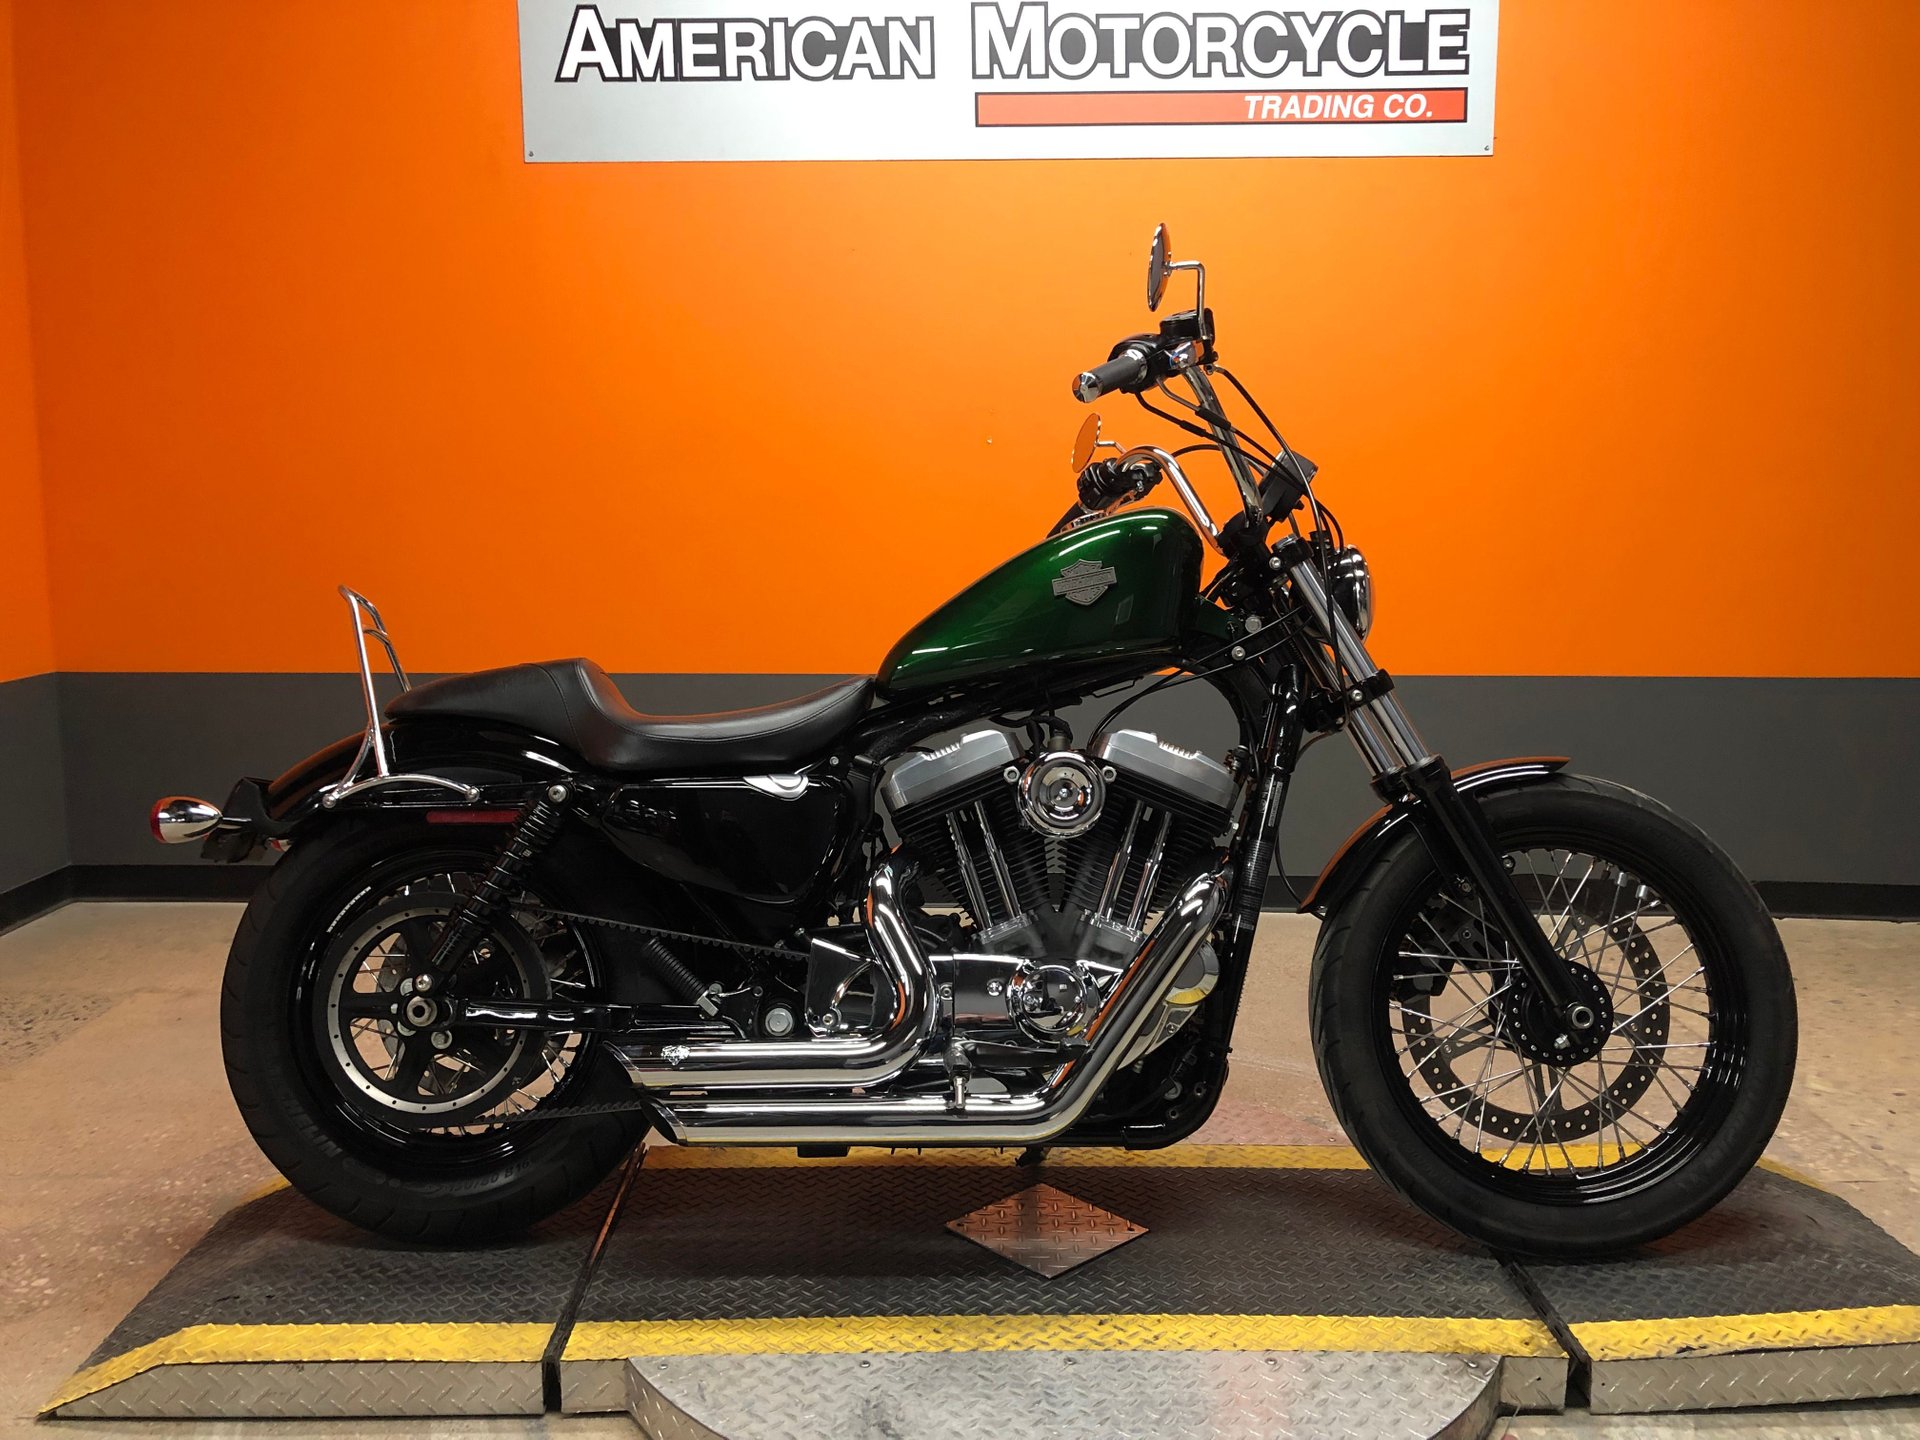 2008 Harley-Davidson Sportster 1200 | American Motorcycle Trading Company -  Used Harley Davidson Motorcycles